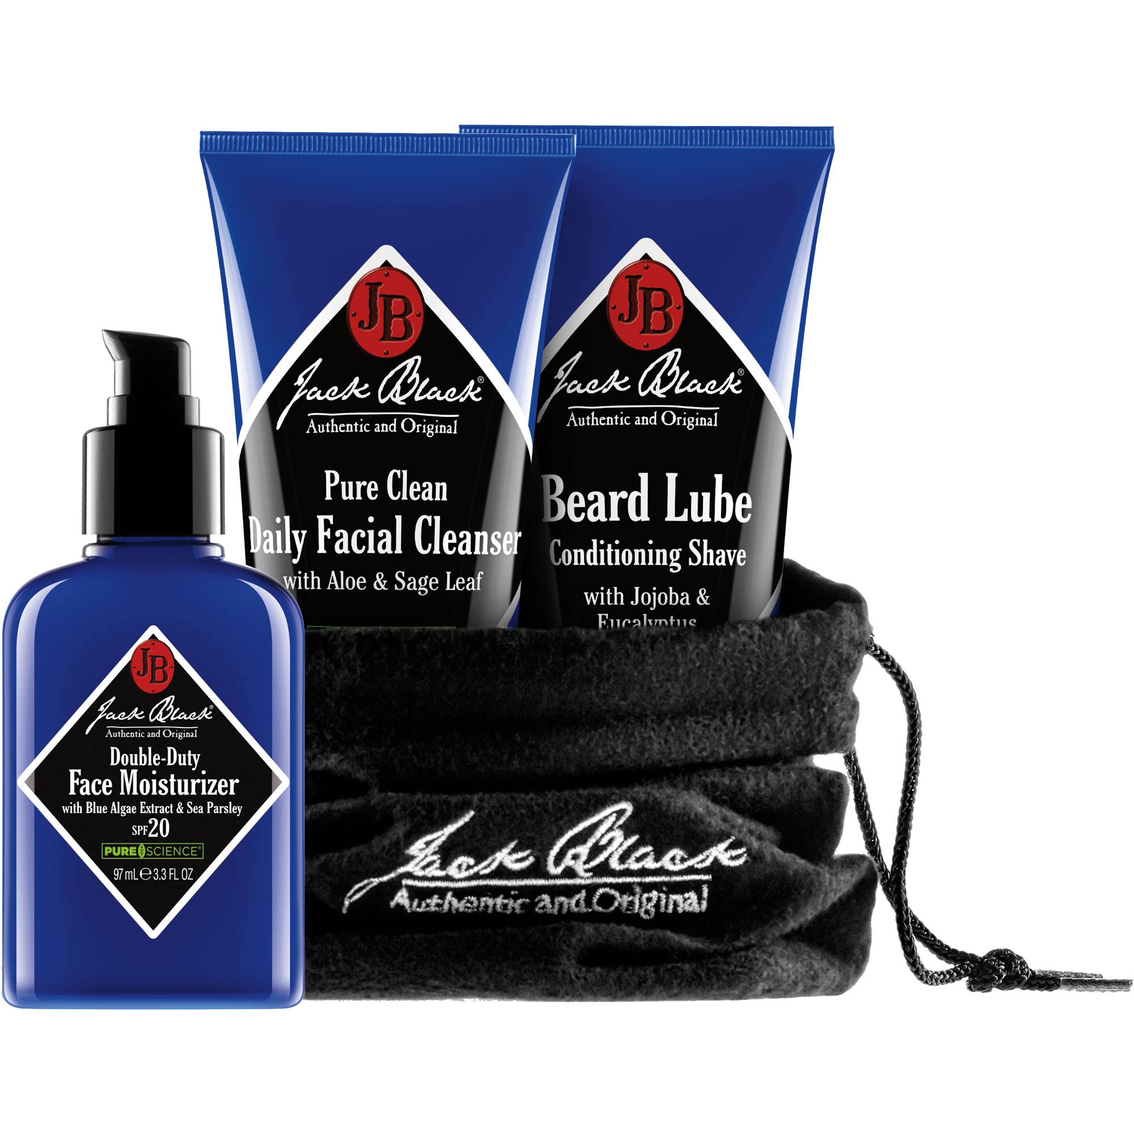 jack black moisturizer and cleanser set review